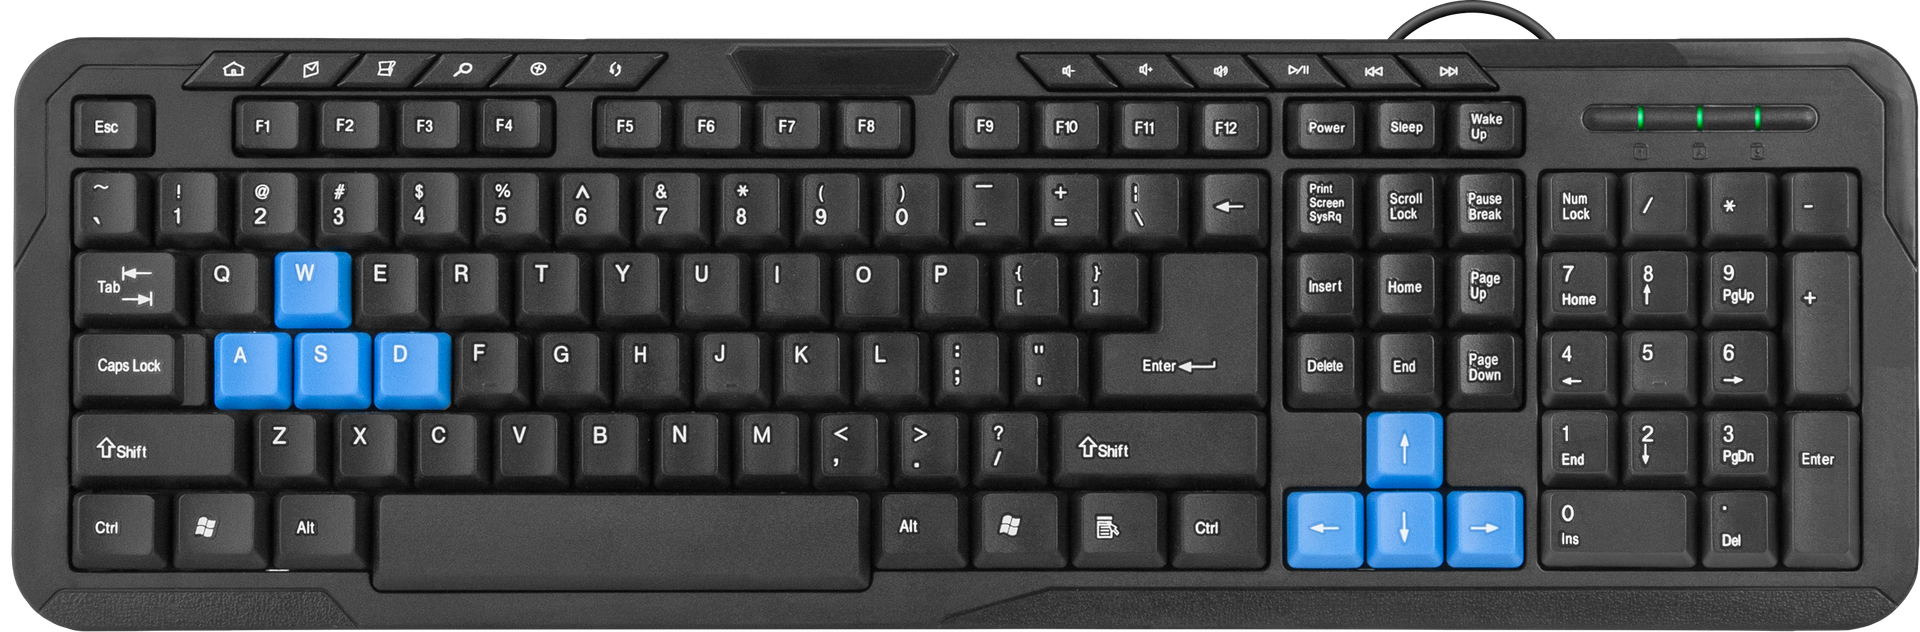 Клавиатура DEFENDER HM-430 RU,черый,полноразмерная